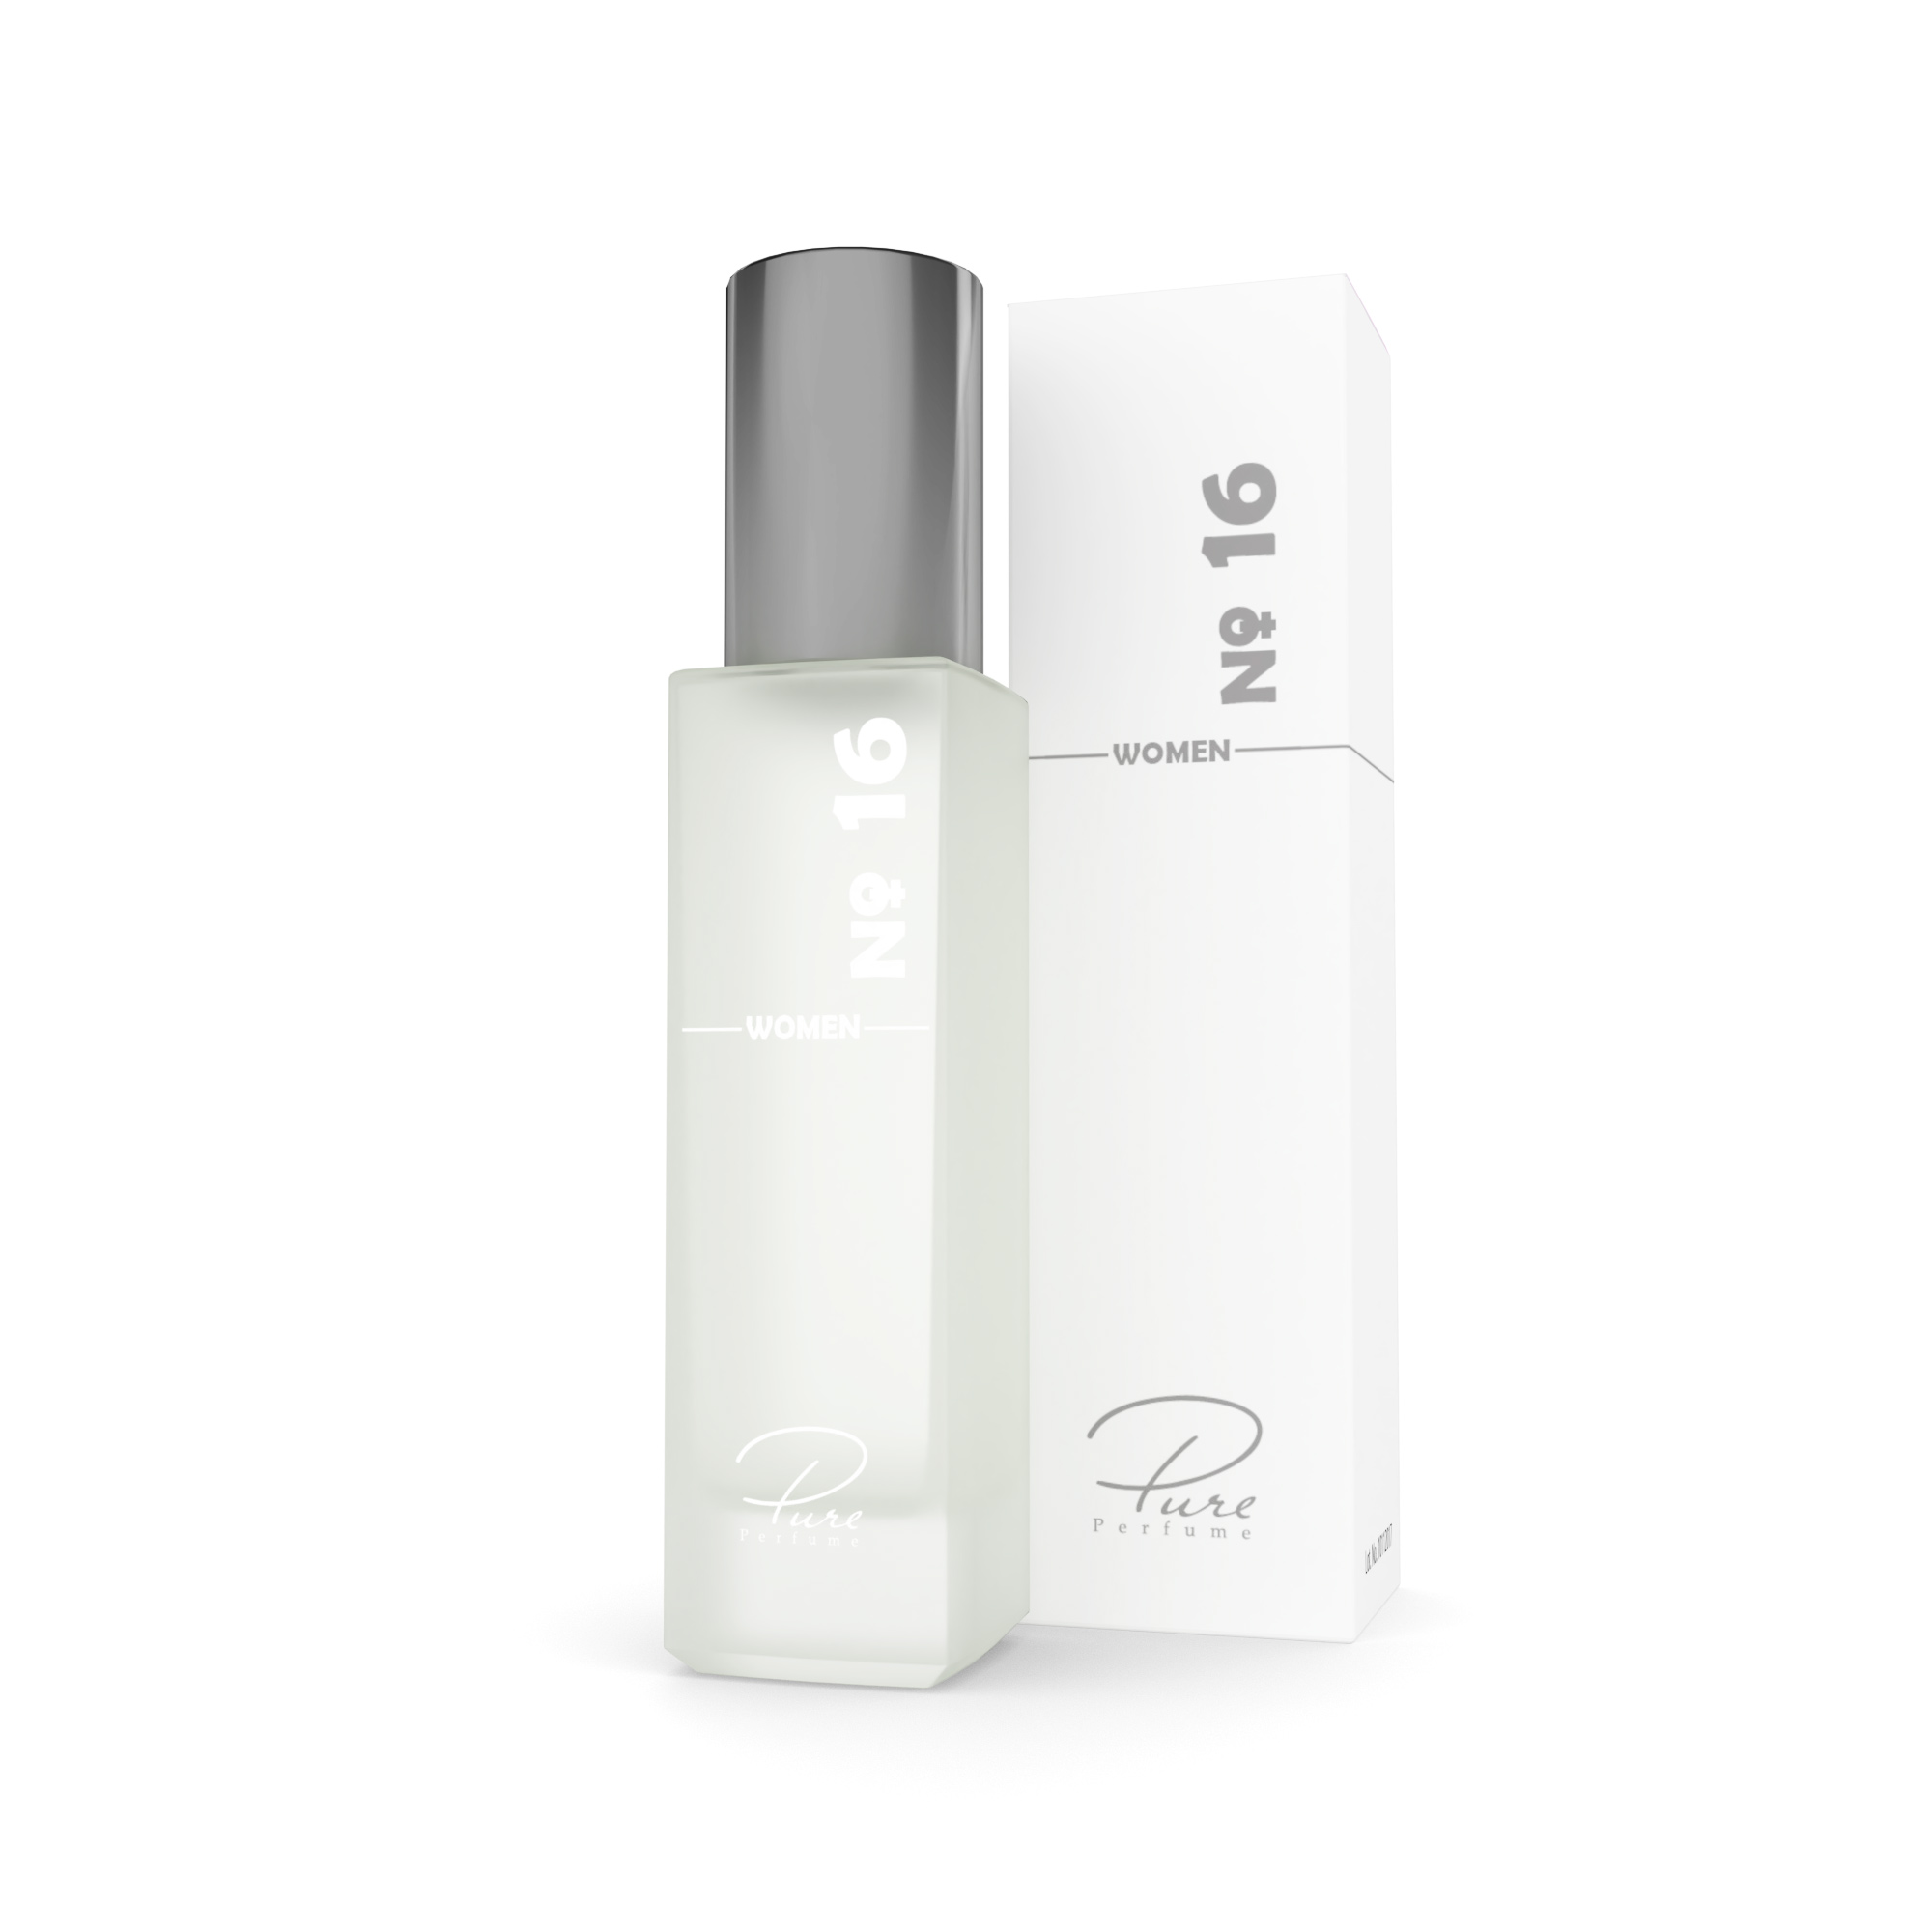 Parfum no 16 - oriental and vanilla perfume for women 15 ml